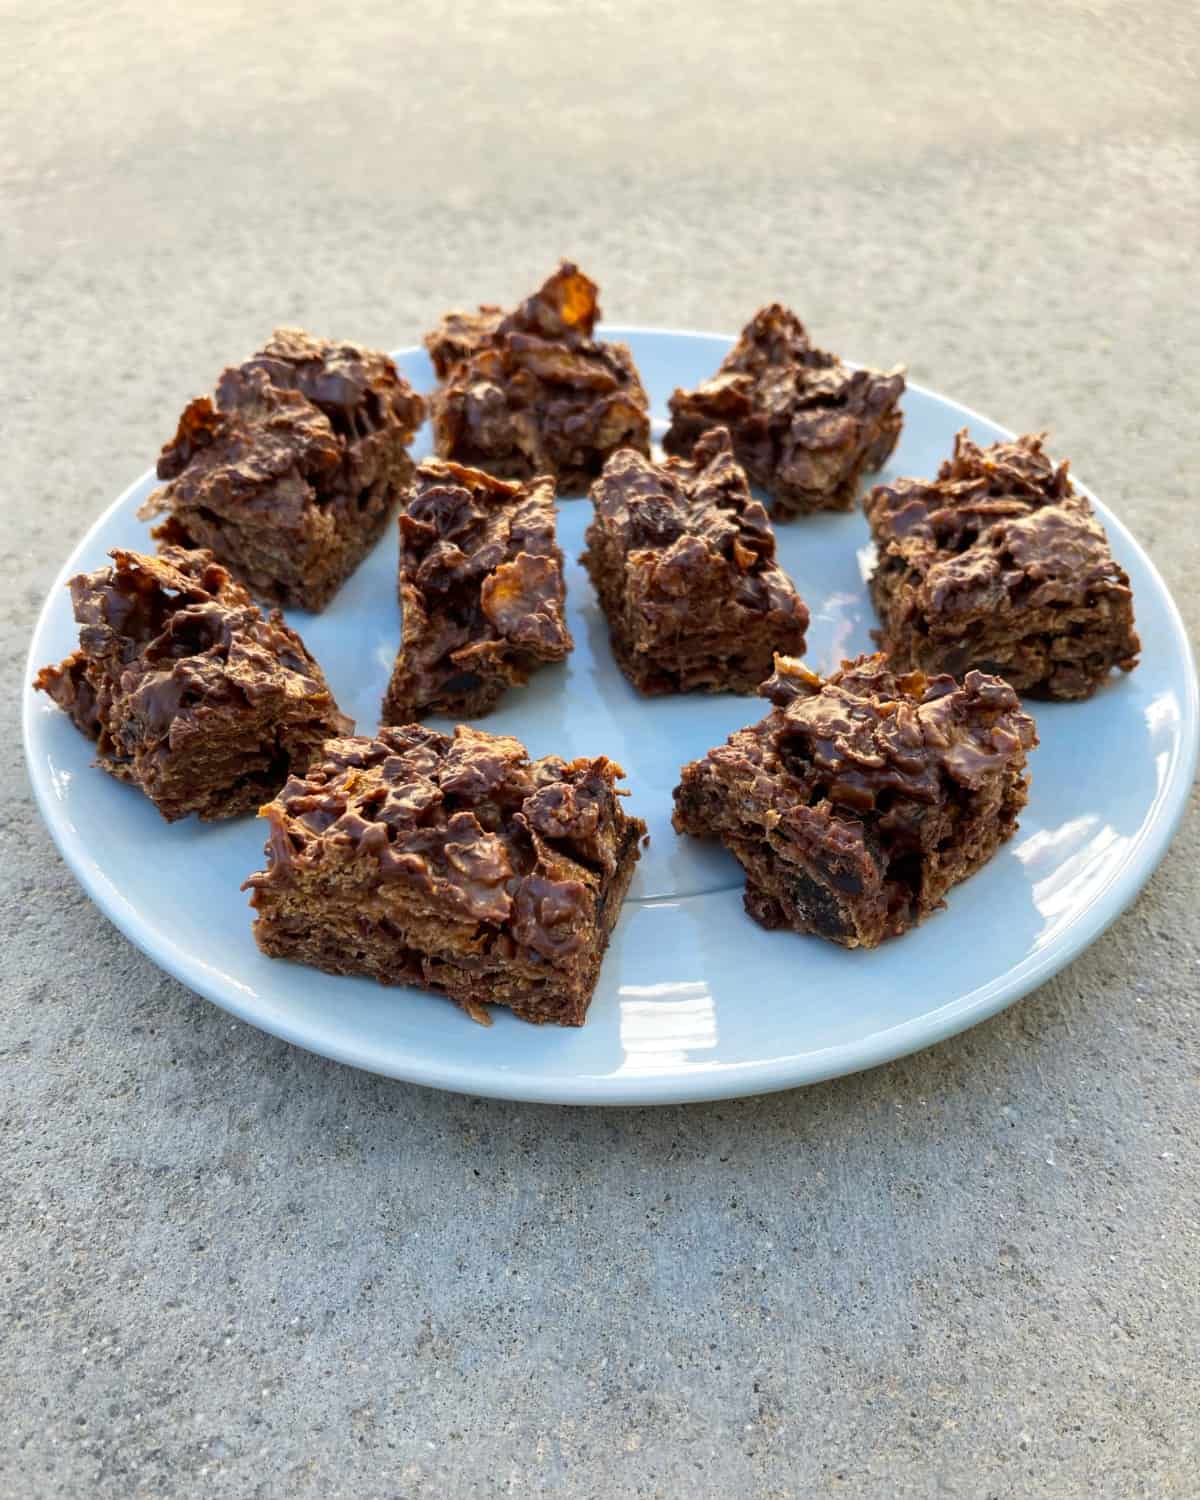 No-bake chocolate raisin bran treats on light blue serving plate.